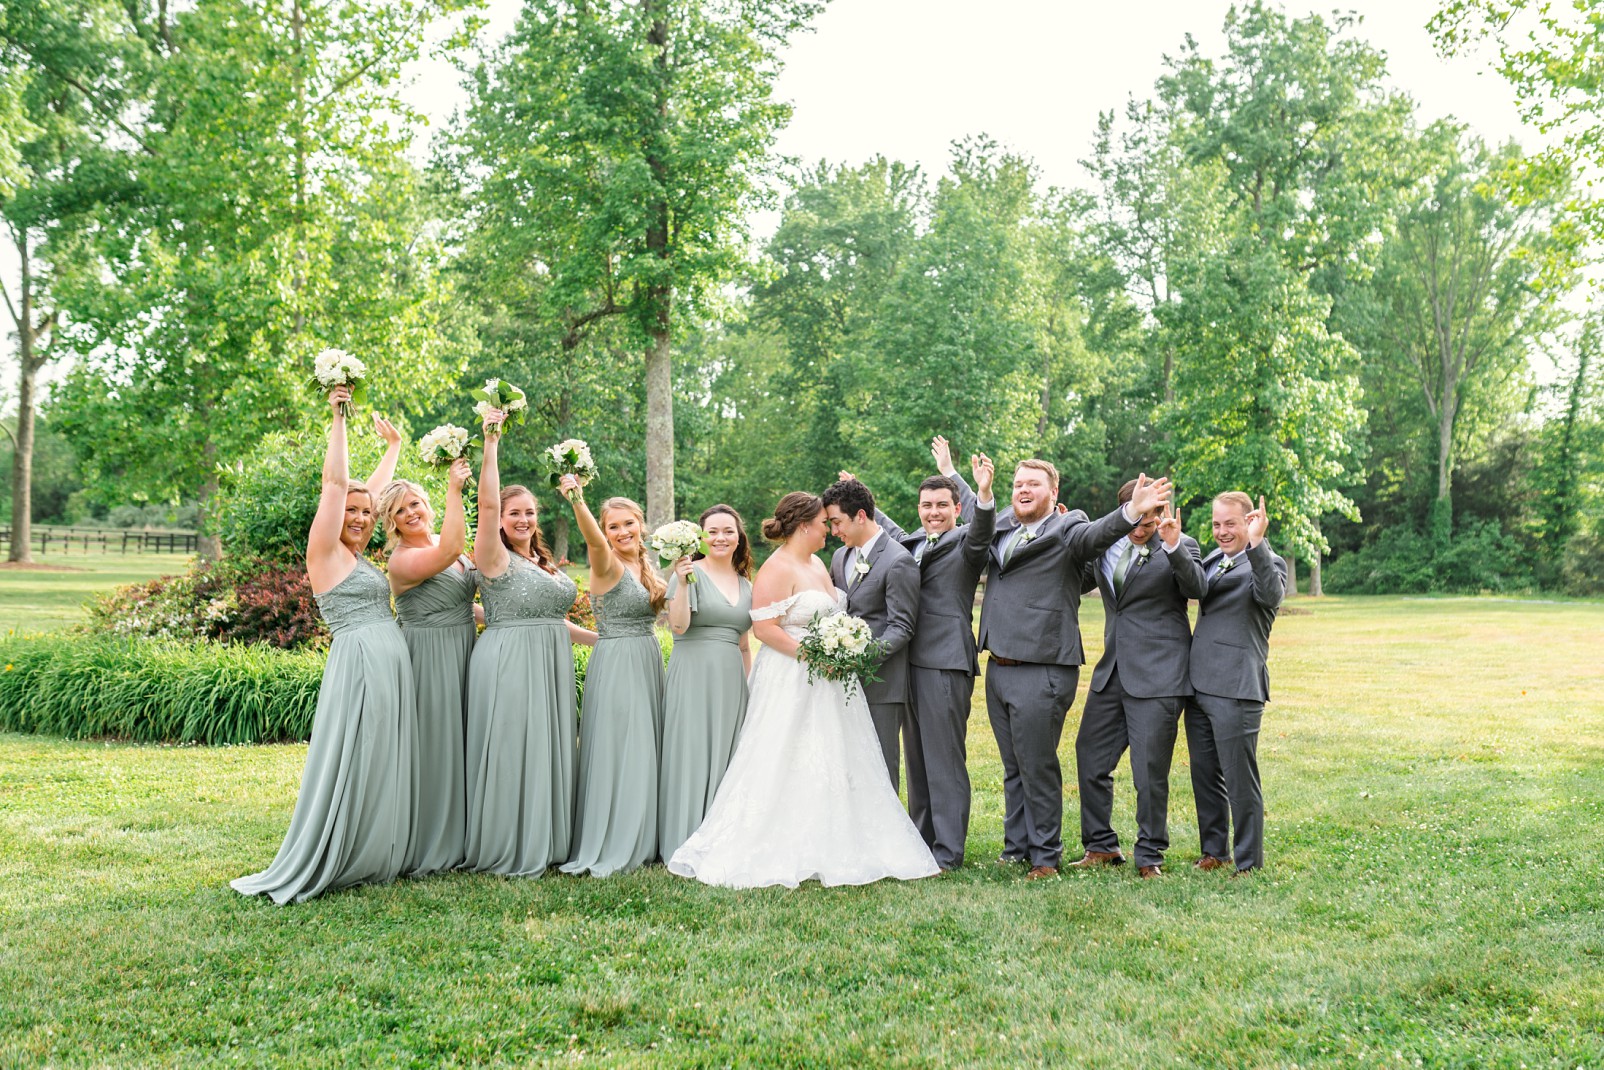 Bride & Groom with wedding party | Dayton Ohio Wedding Photographer